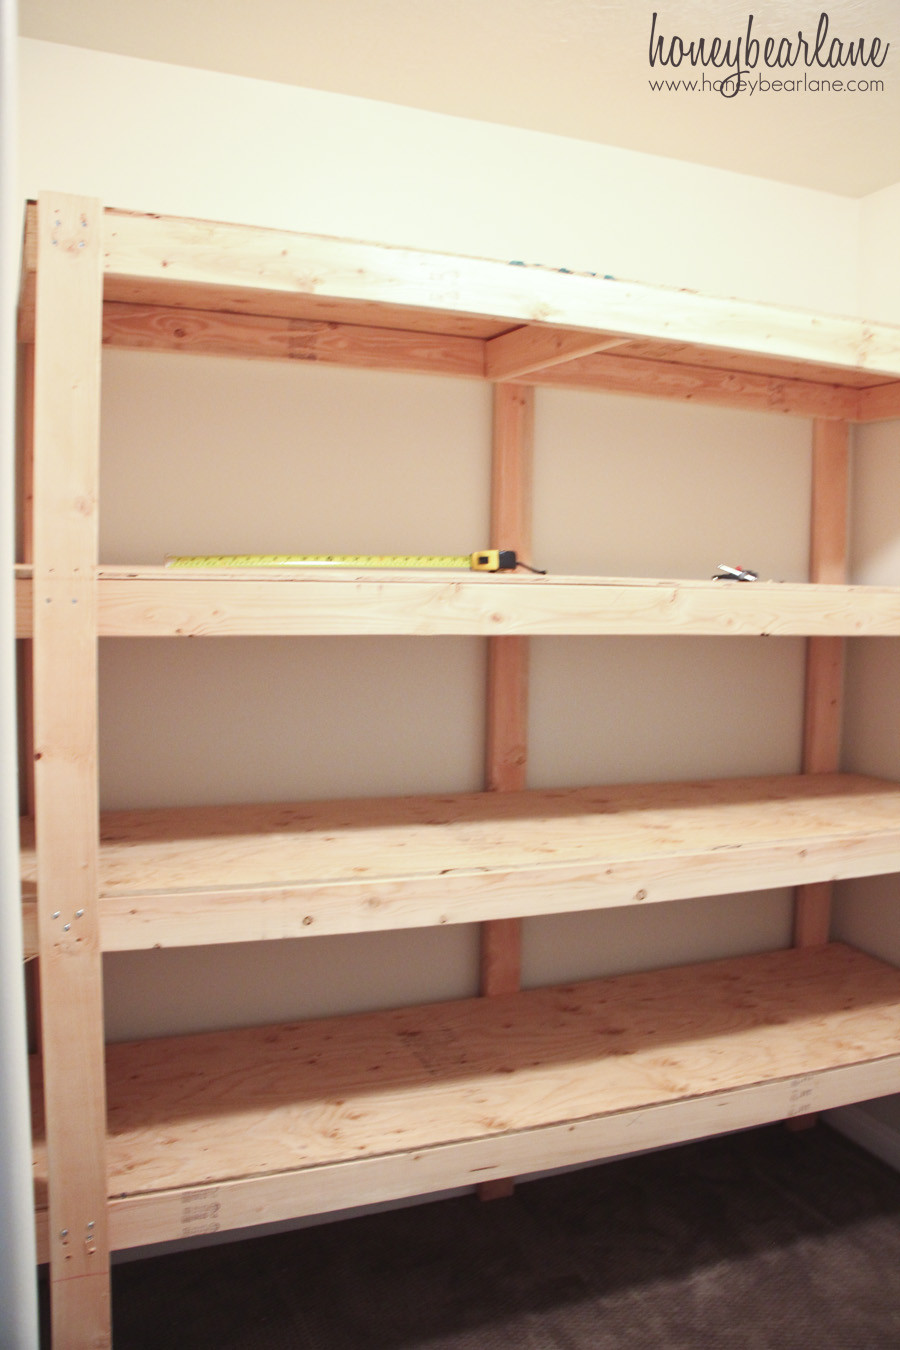 Best ideas about Garage Storage Shelves
. Save or Pin DIY Storage Shelves HoneyBear Lane Now.